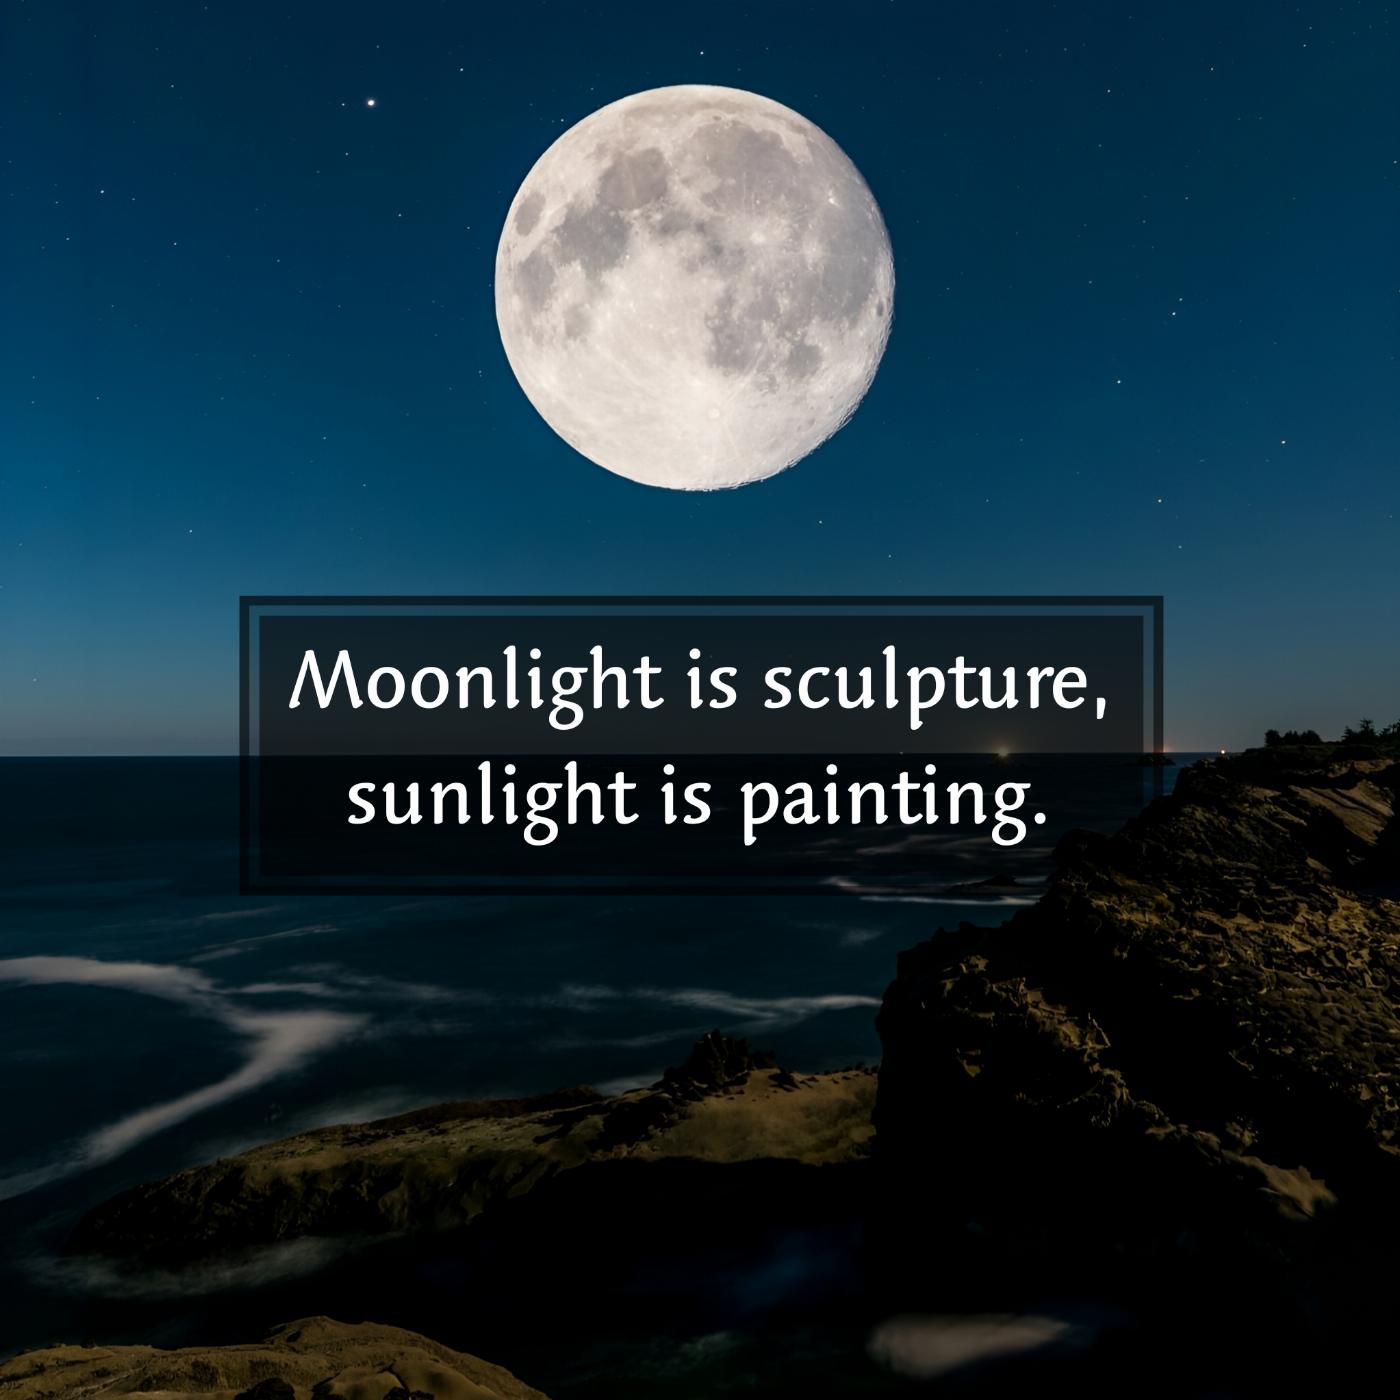 Moonlight is sculpture sunlight is painting